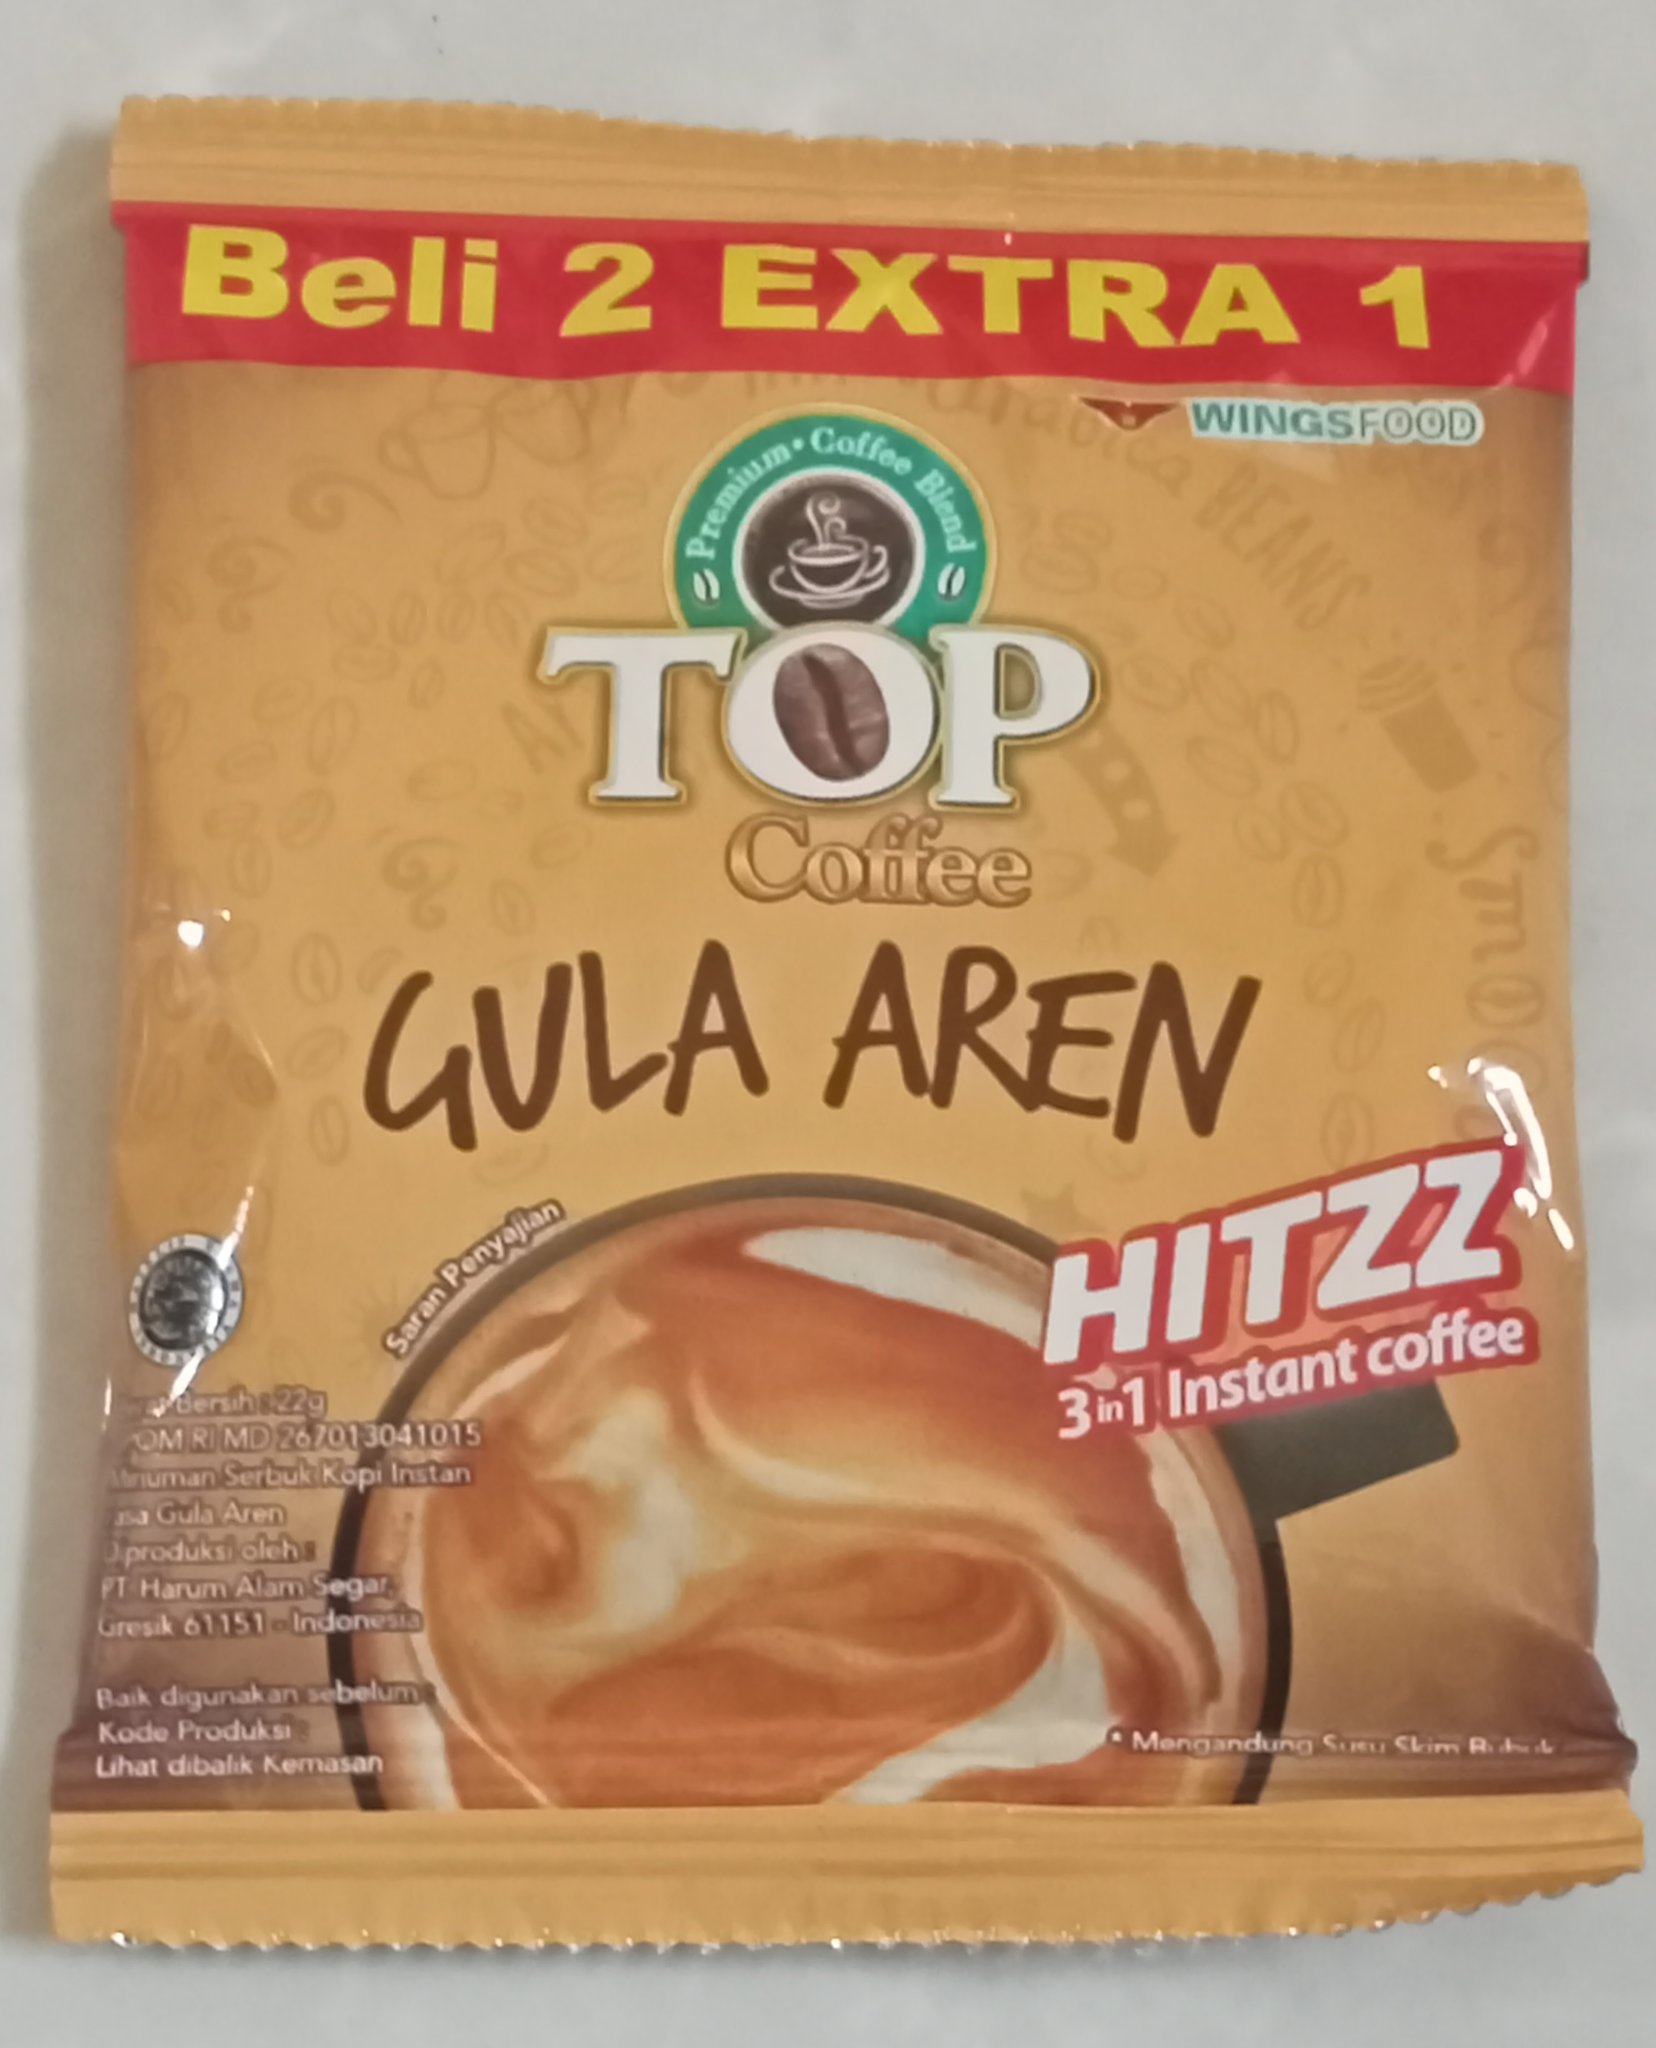 Top coffee kopi gula aren